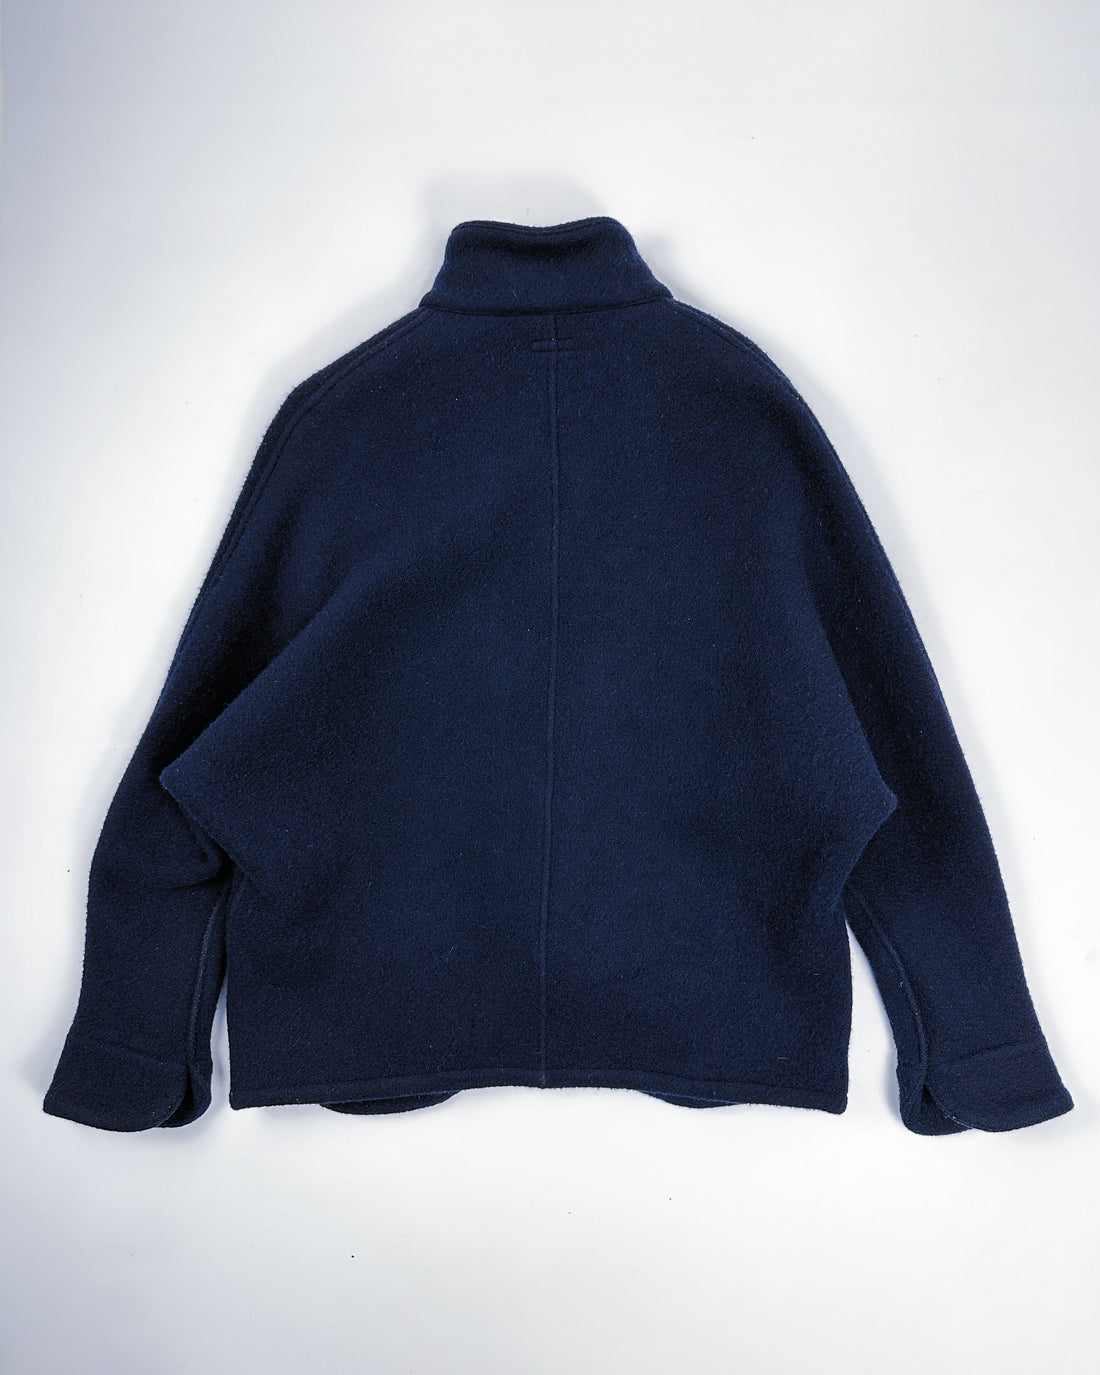 Kapital Japan 11 Buttons Navy Blue Fleece Jacket 1990's